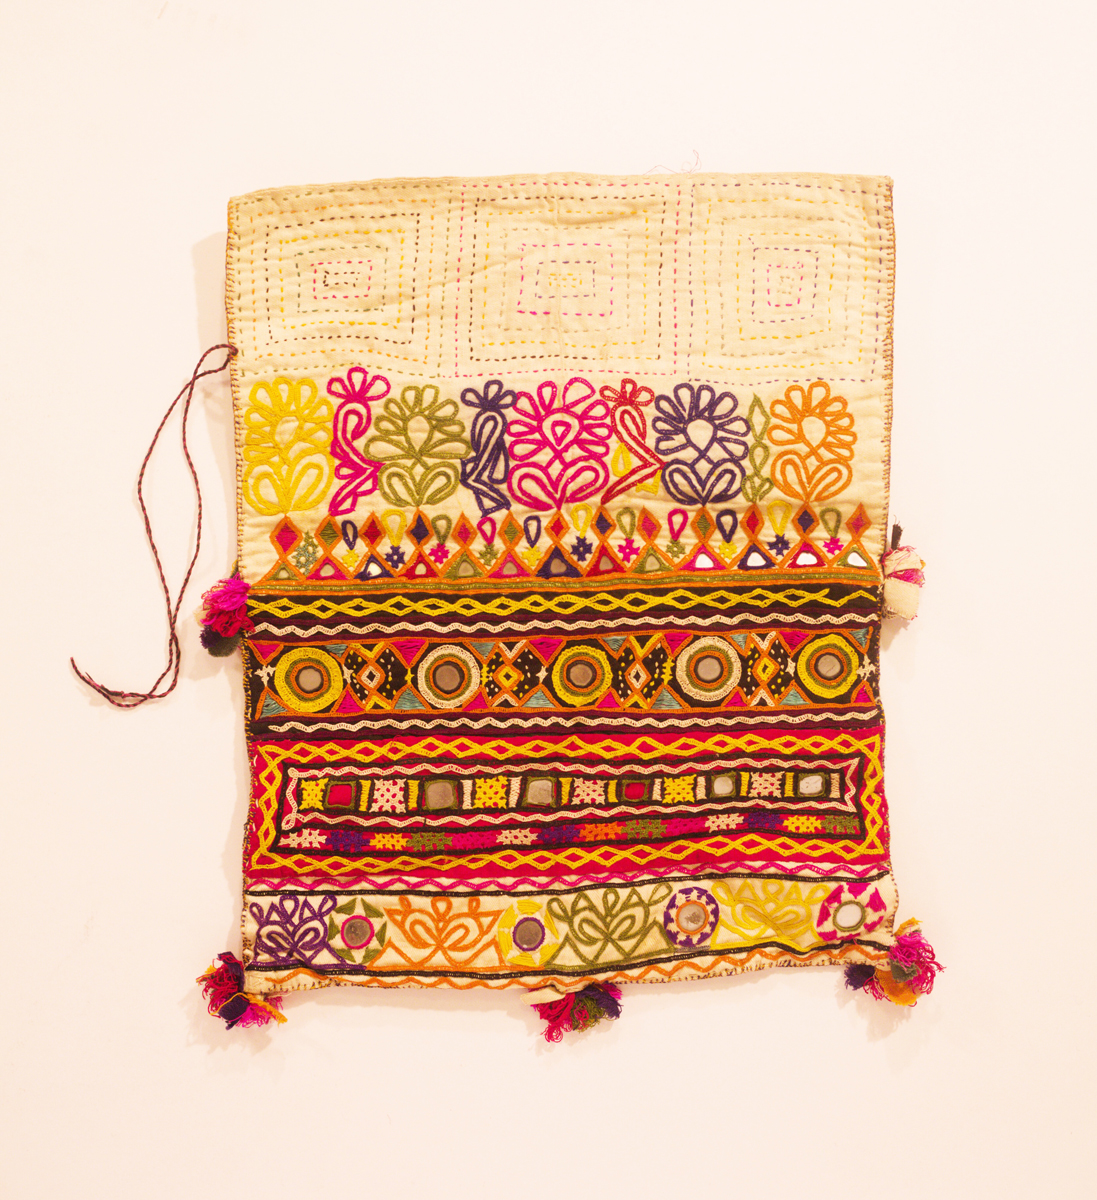 EID Gift 10 Pc Handmade Indian Rajasthani Embroidered Clutch Purse Bag  Handbag | eBay